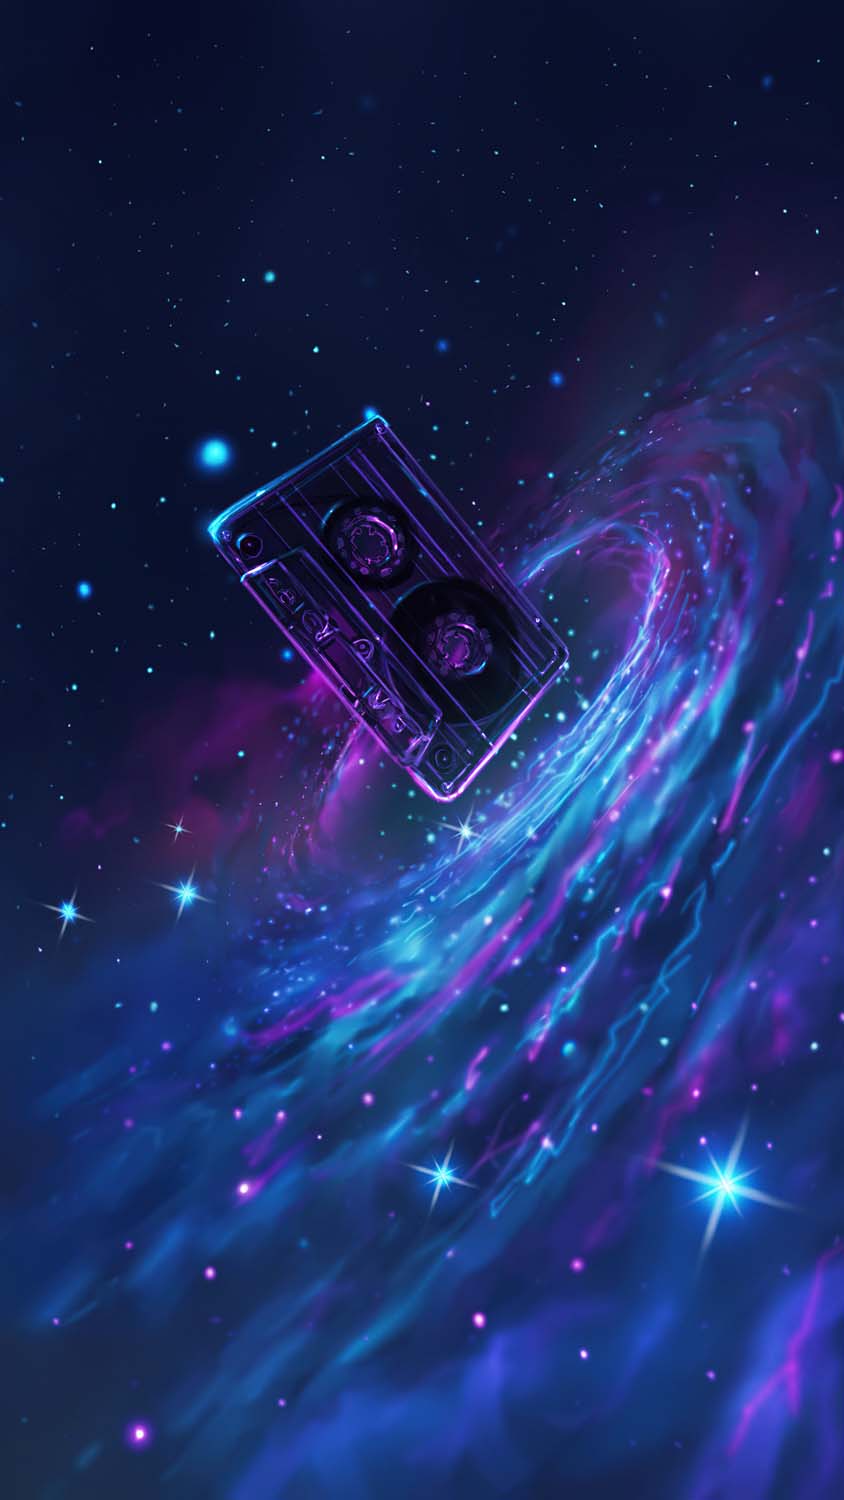 Cassette in Space iPhone Wallpaper HD